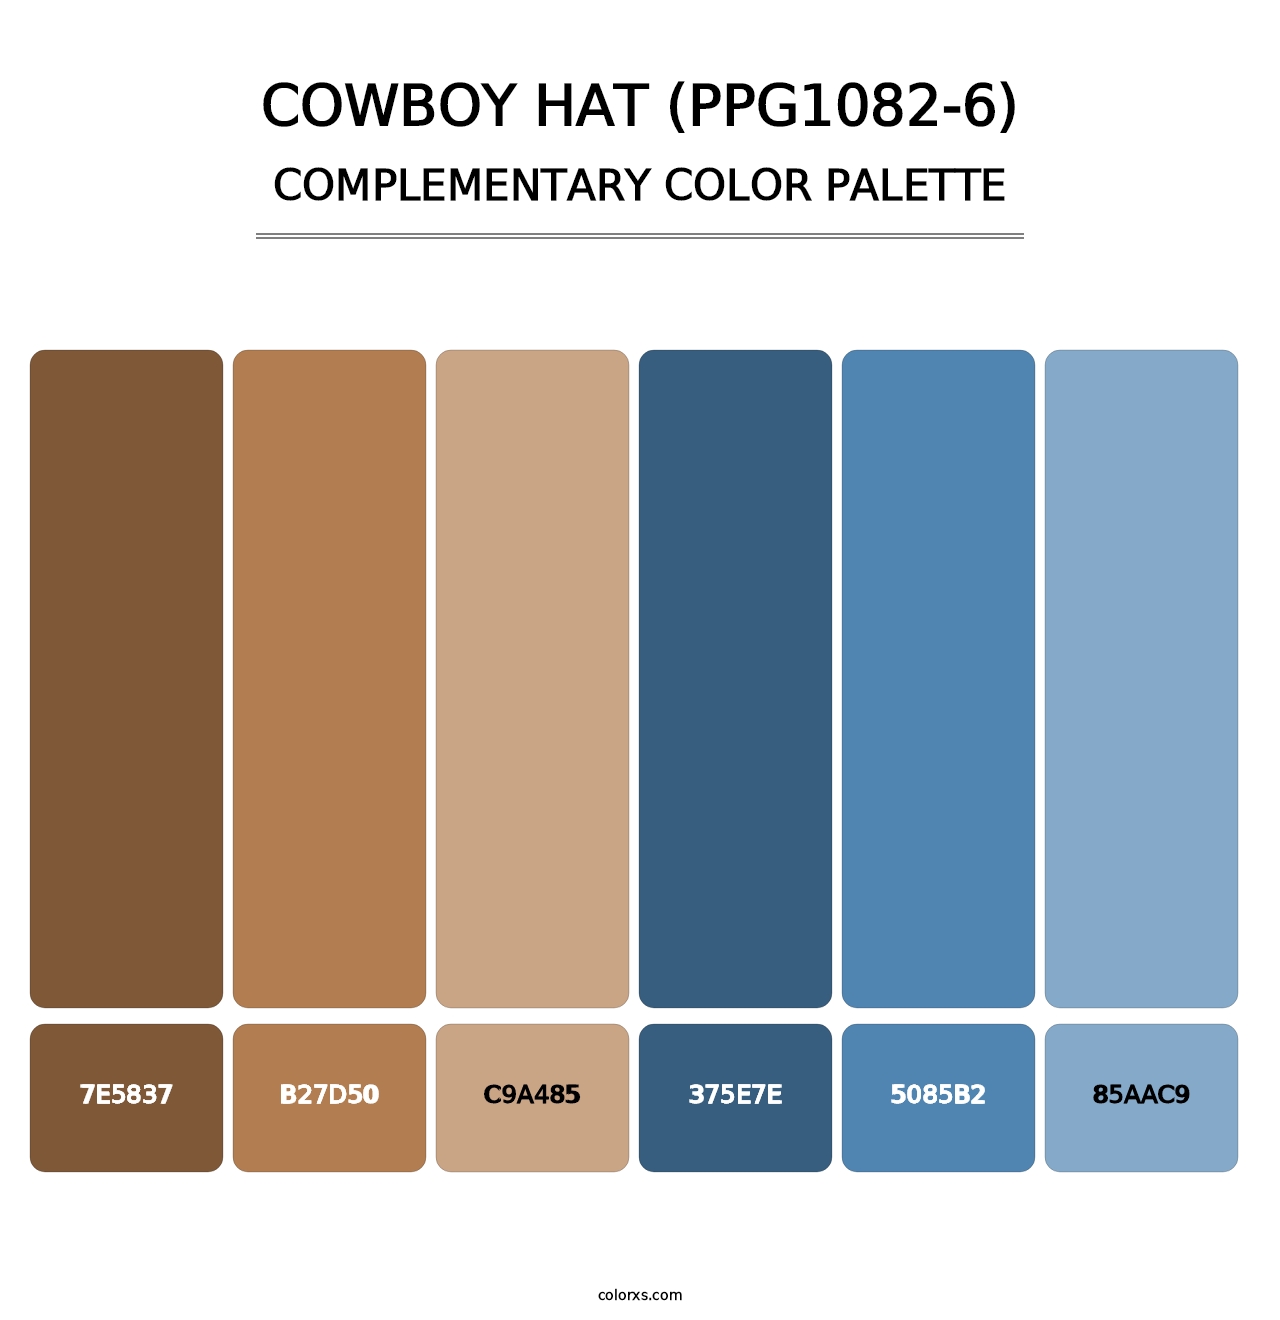 Cowboy Hat (PPG1082-6) - Complementary Color Palette